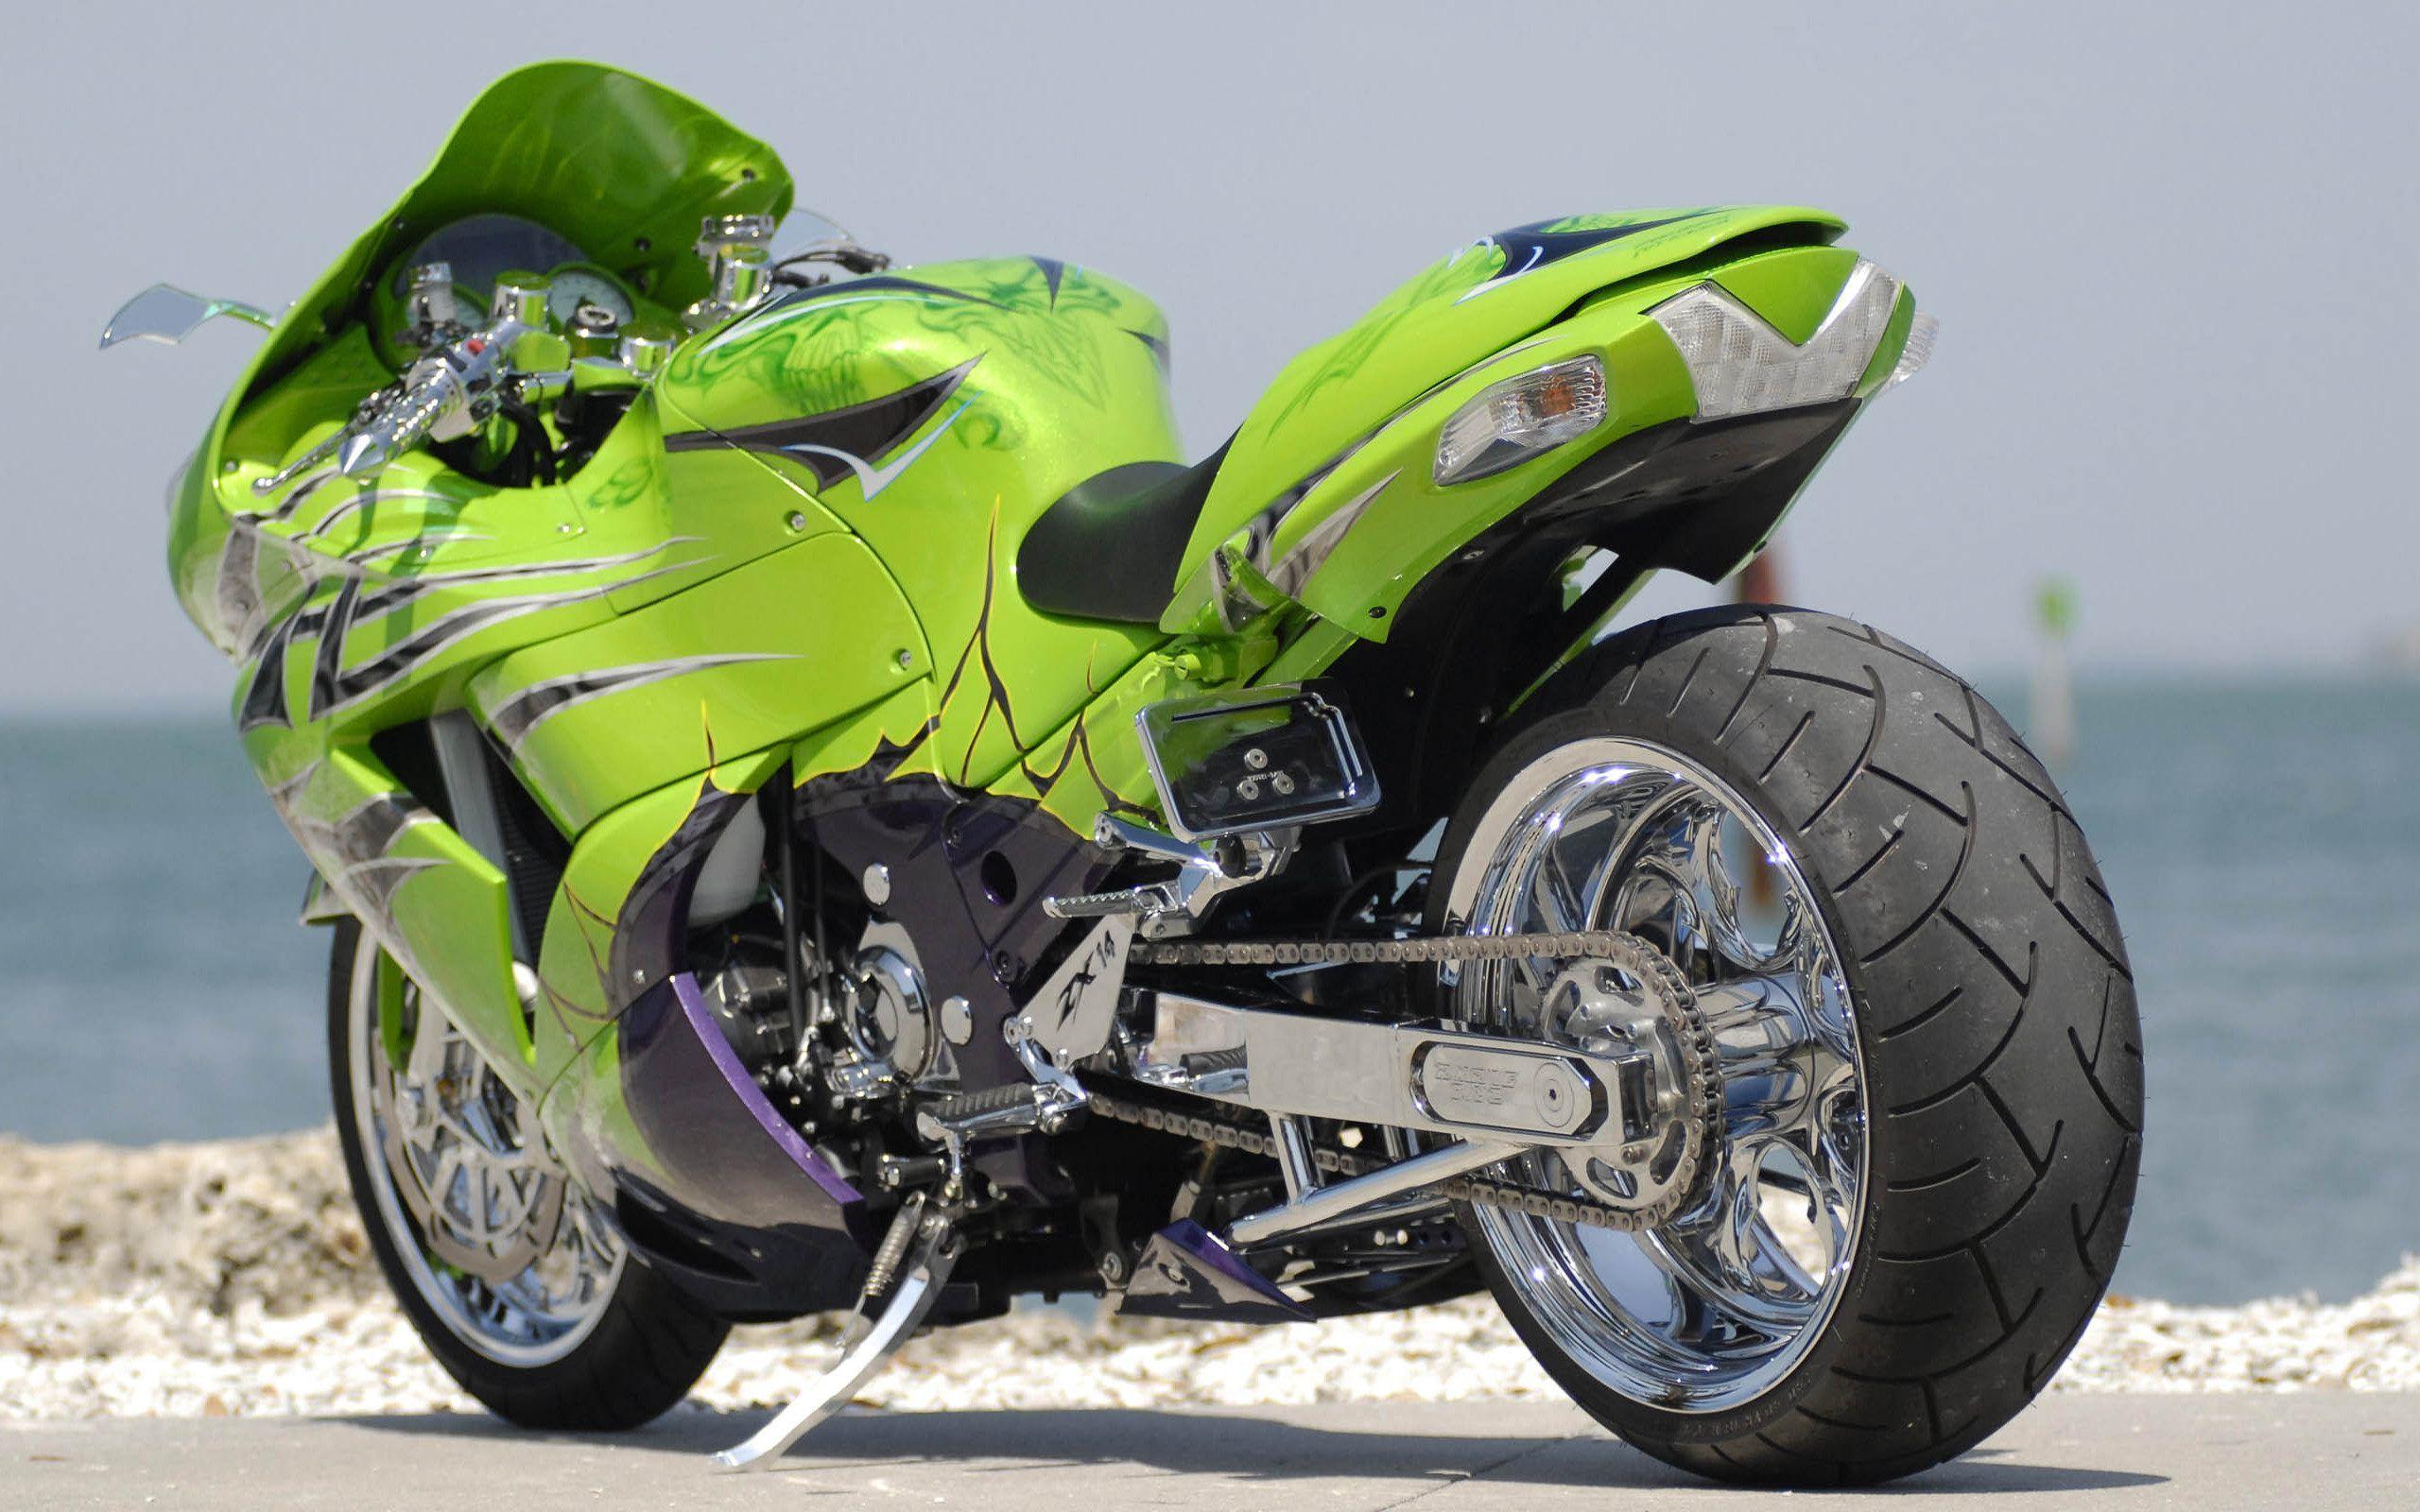 Kawasaki ZX14r Heavy Bike Wallpaper For Desktop & Mobile